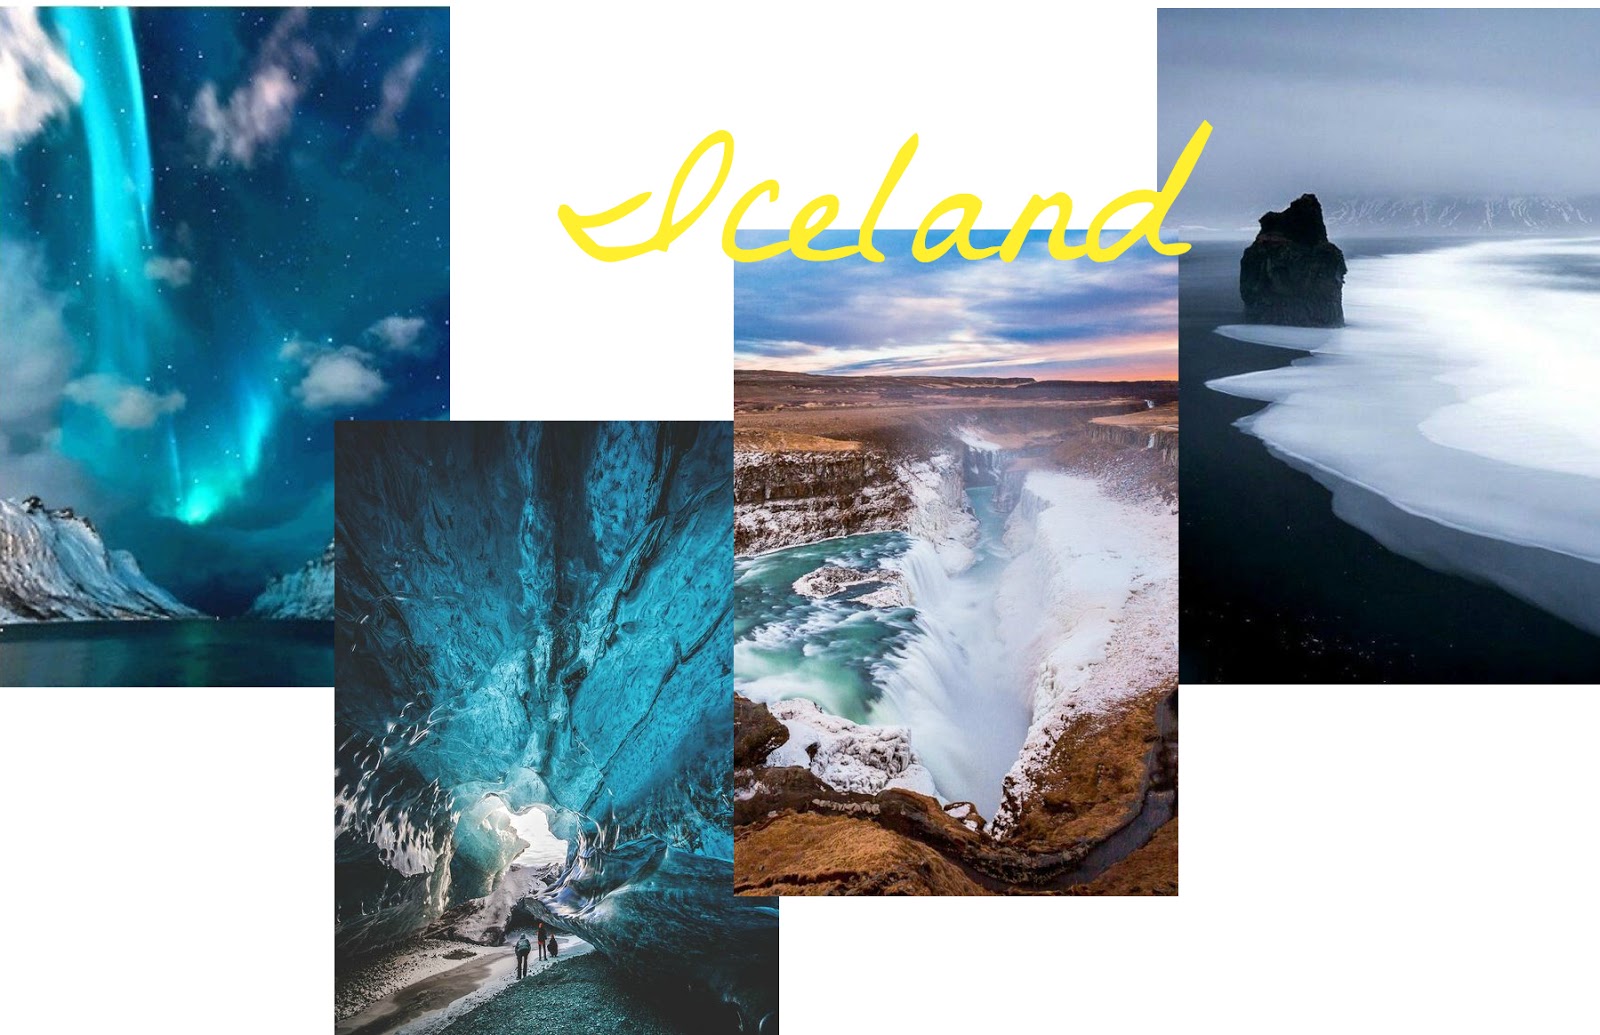 Travel Bucket List 6 places to see in 2017 Island Iceland Reykjavik www.theblondelion.com